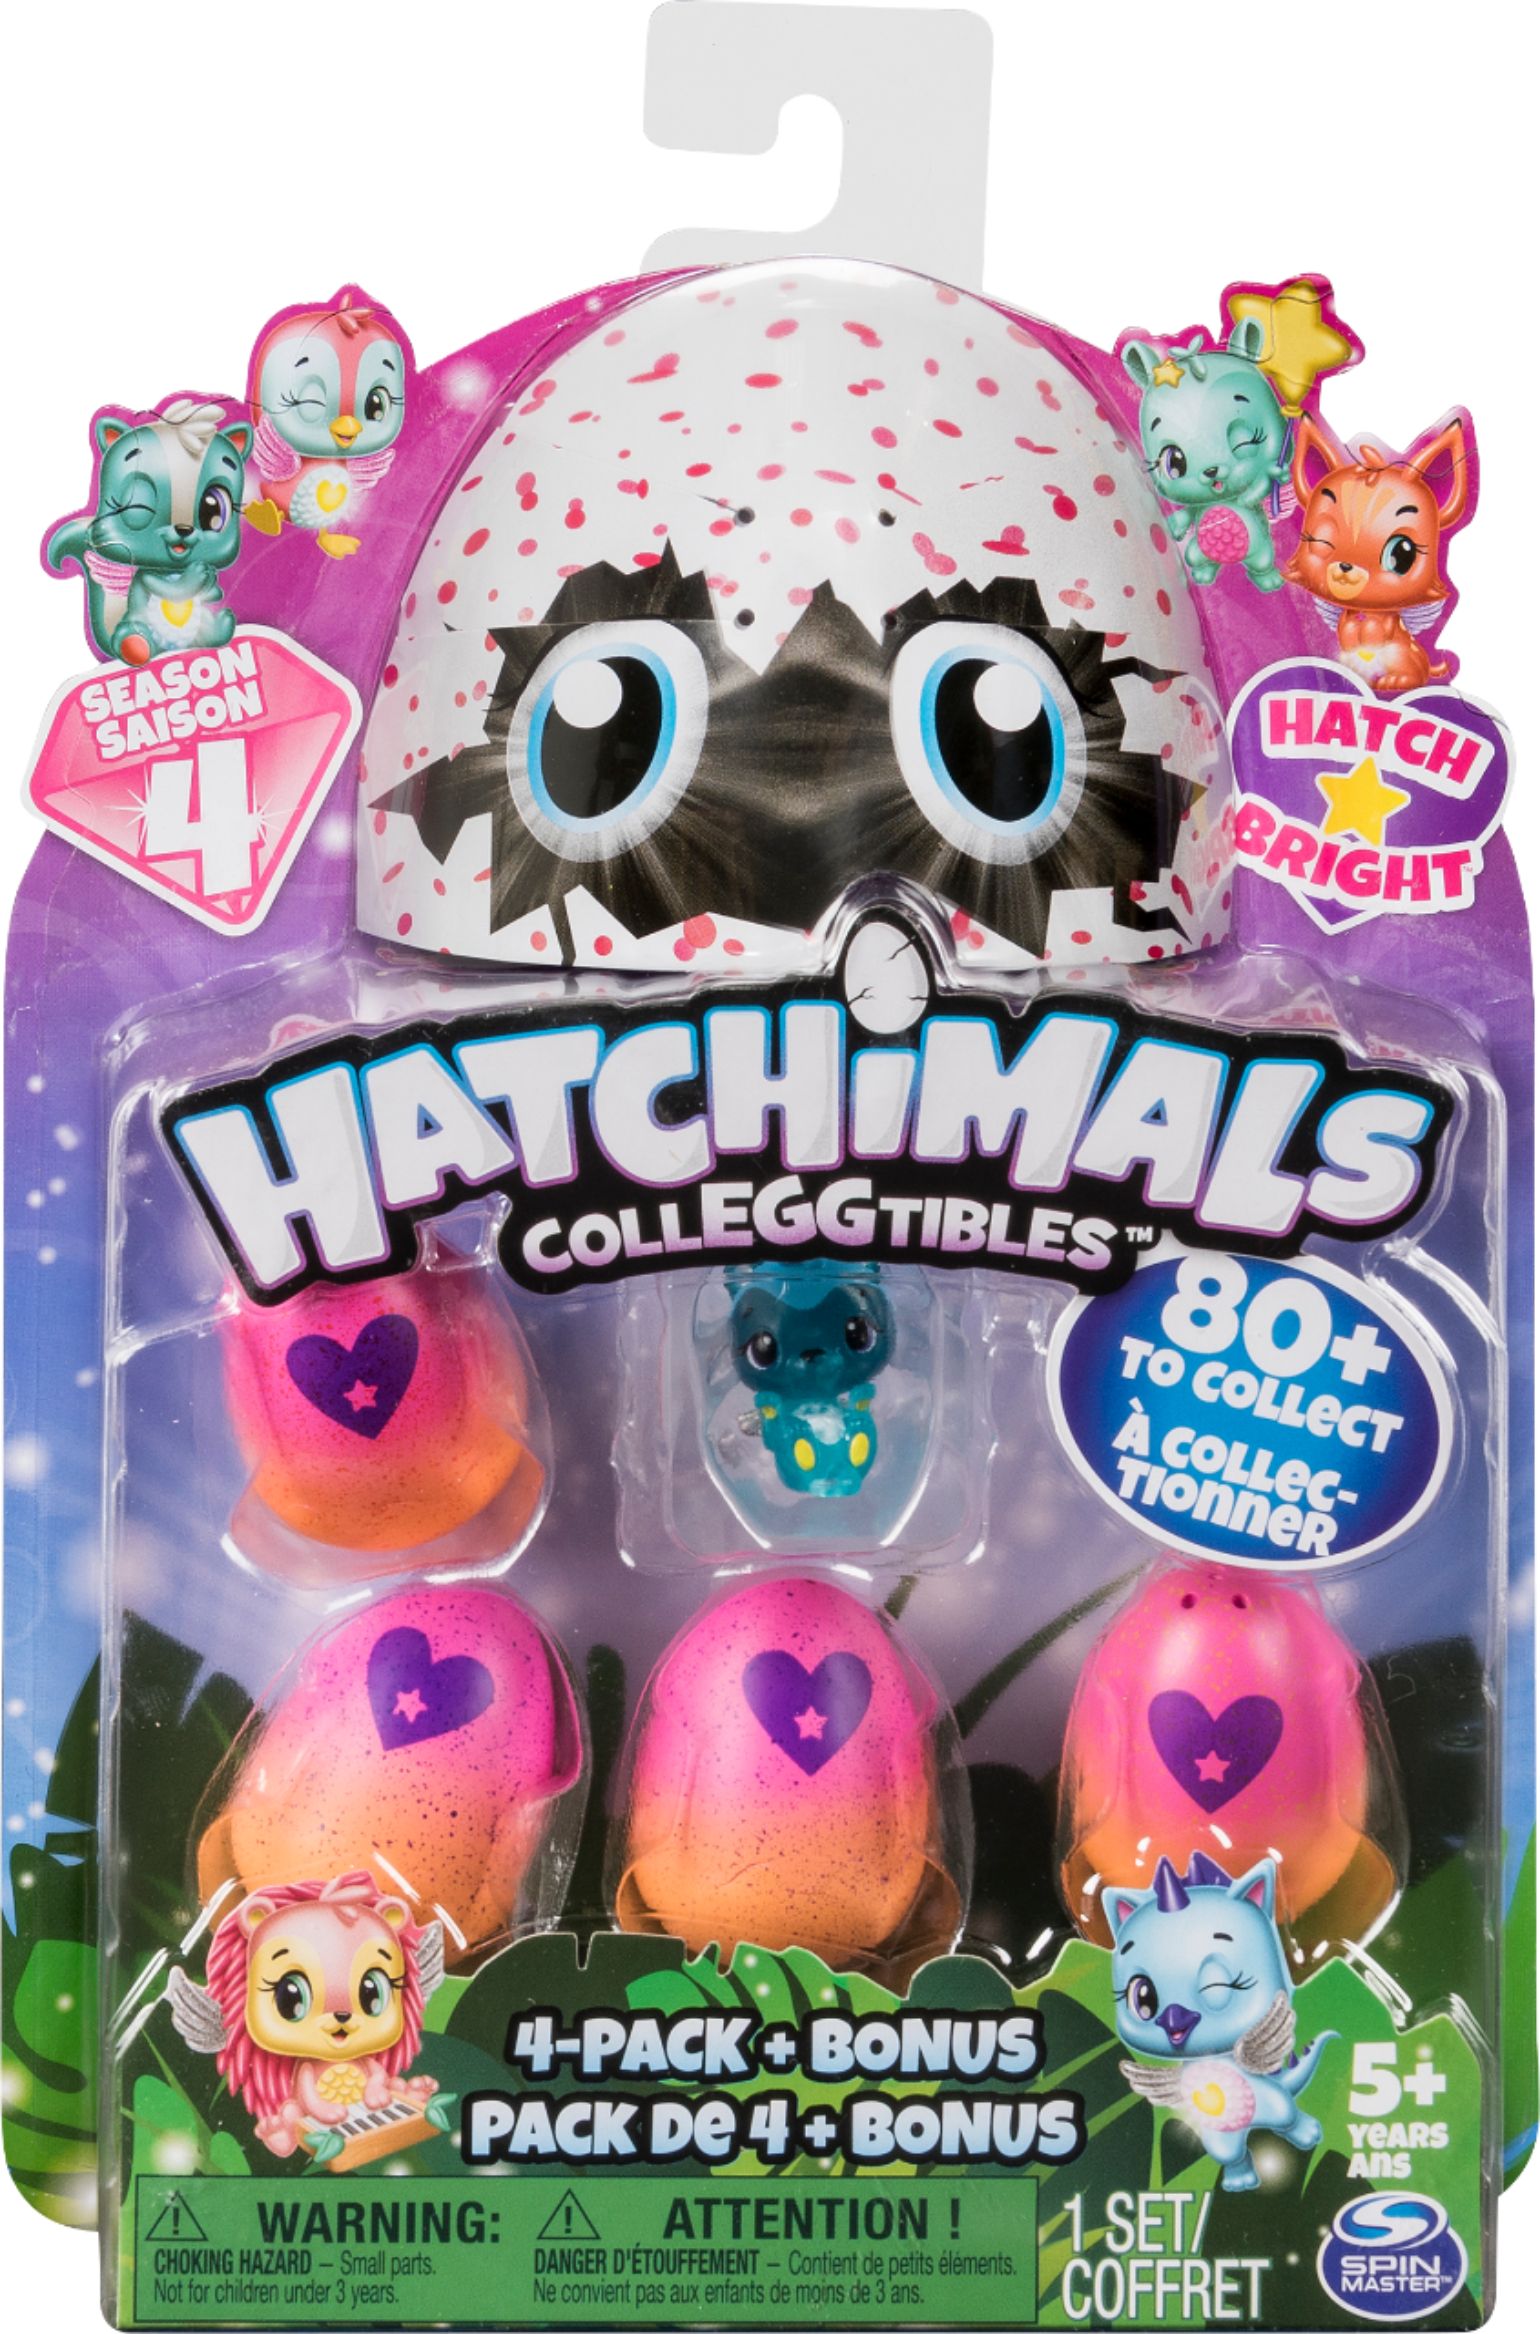 NEW Hatchimals CollEGGtibles 4-Pack Eggs Bonus Figure Season 4 BLIND BOX 